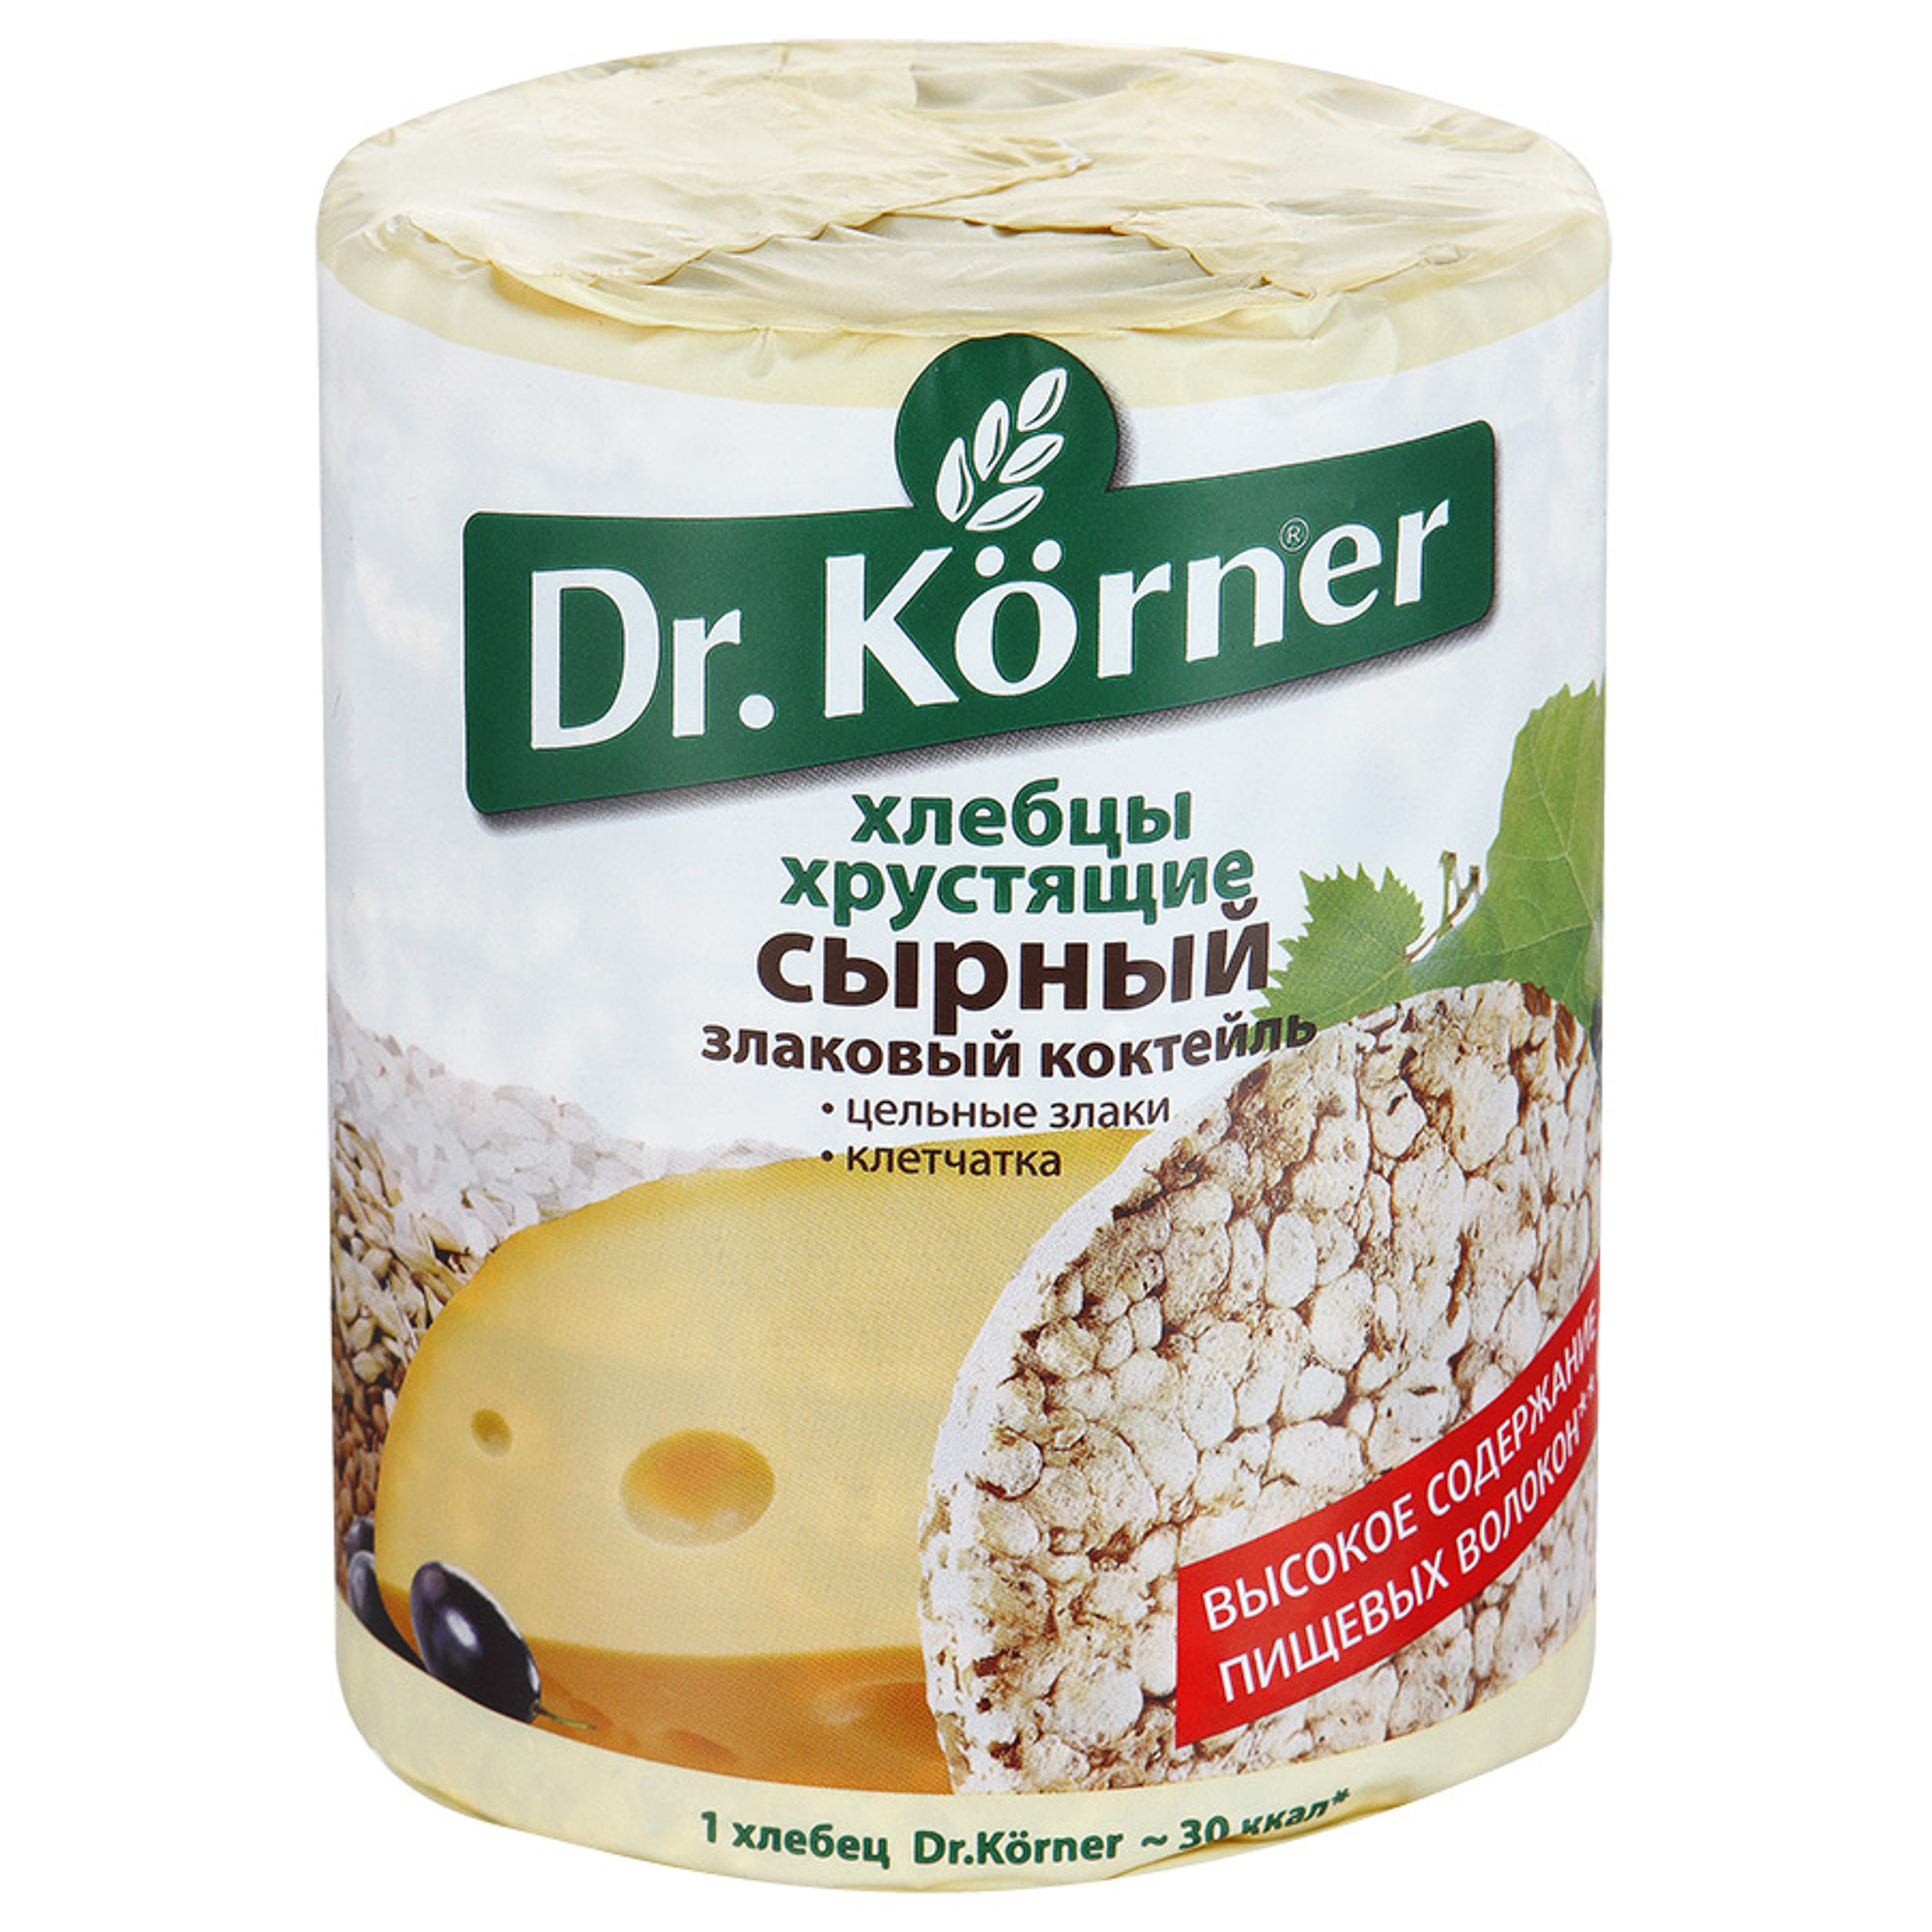 Хлебцы хрустящие Dr. Korner Злаковый коктейль сырный 100 г хлебцы dr korner клюквенные 100 гр